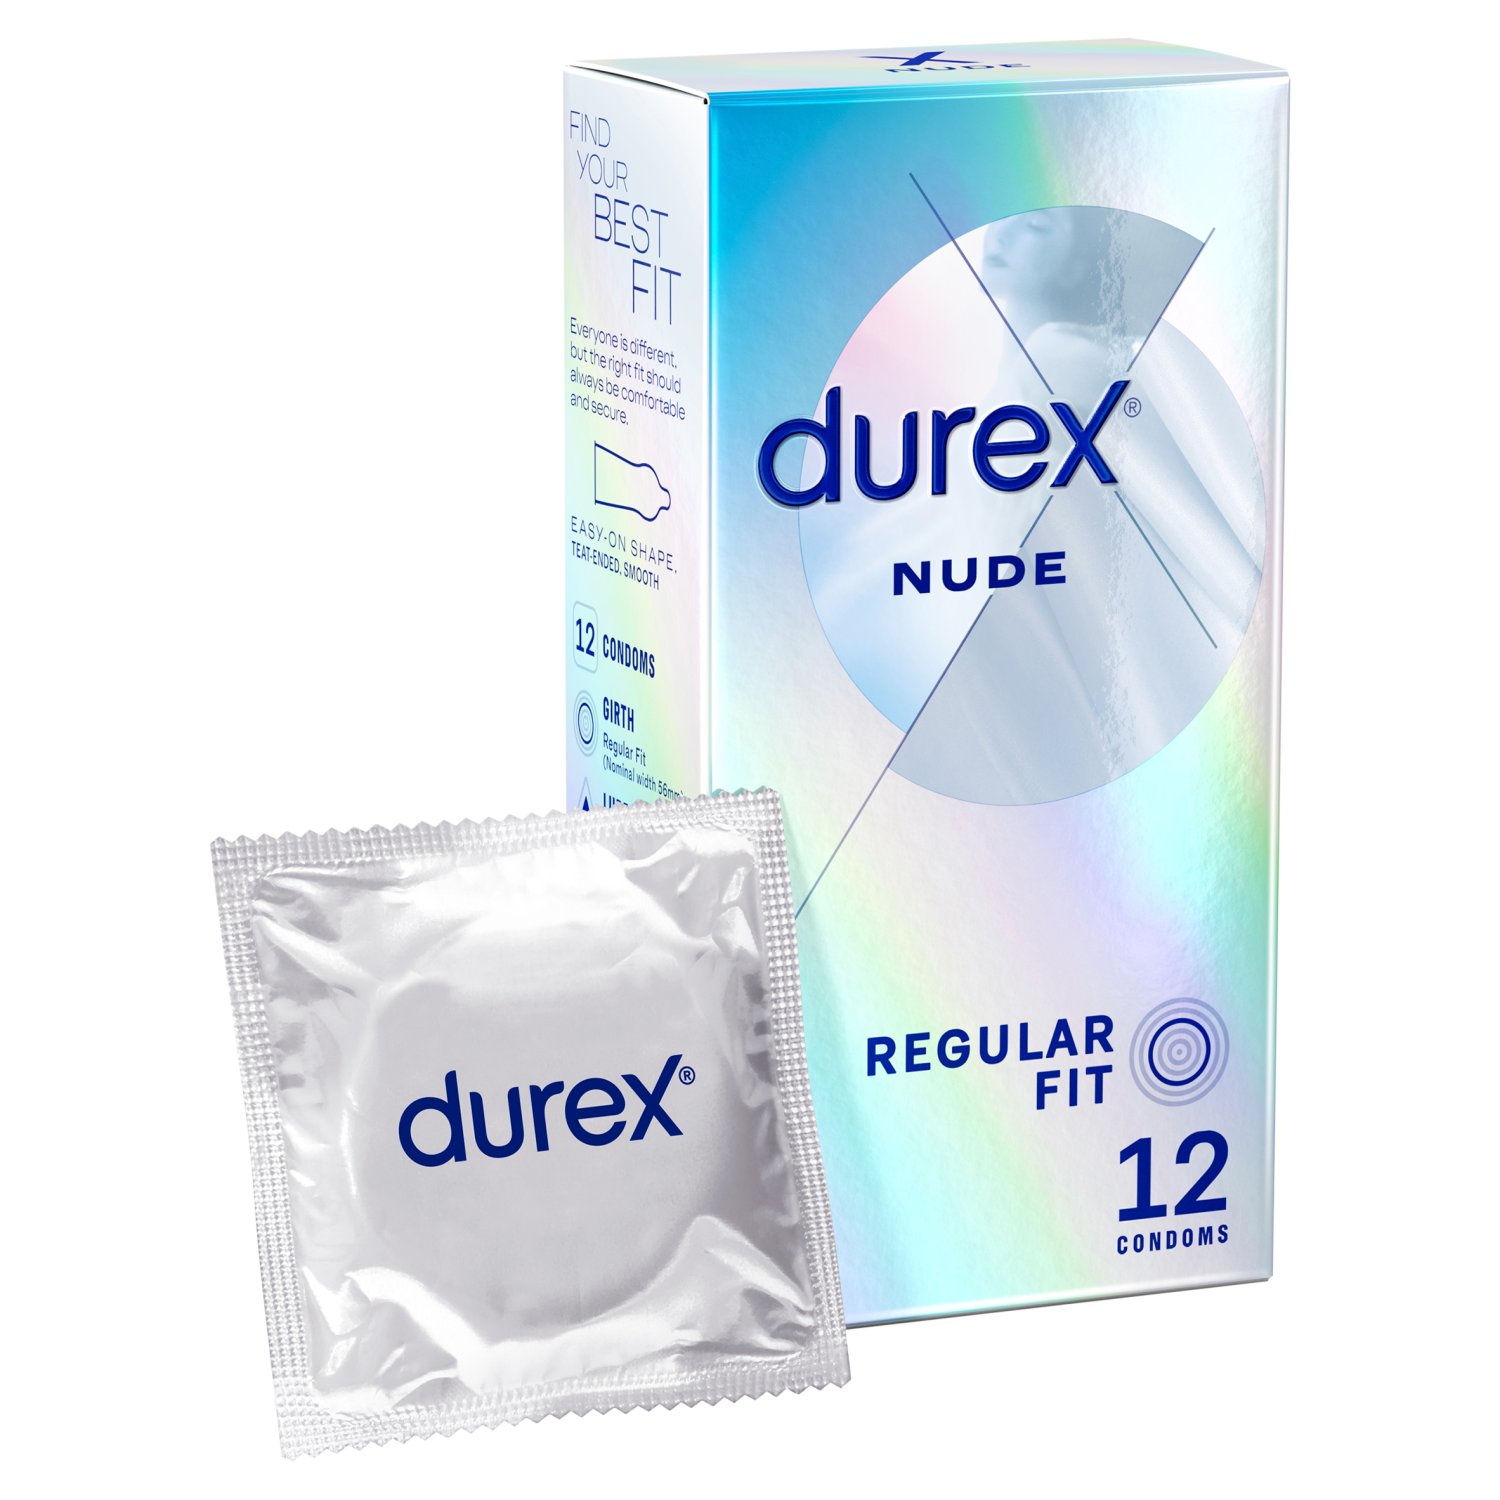 Durex Nude Regular Fit Condoms 12 Pack (12 Piece)